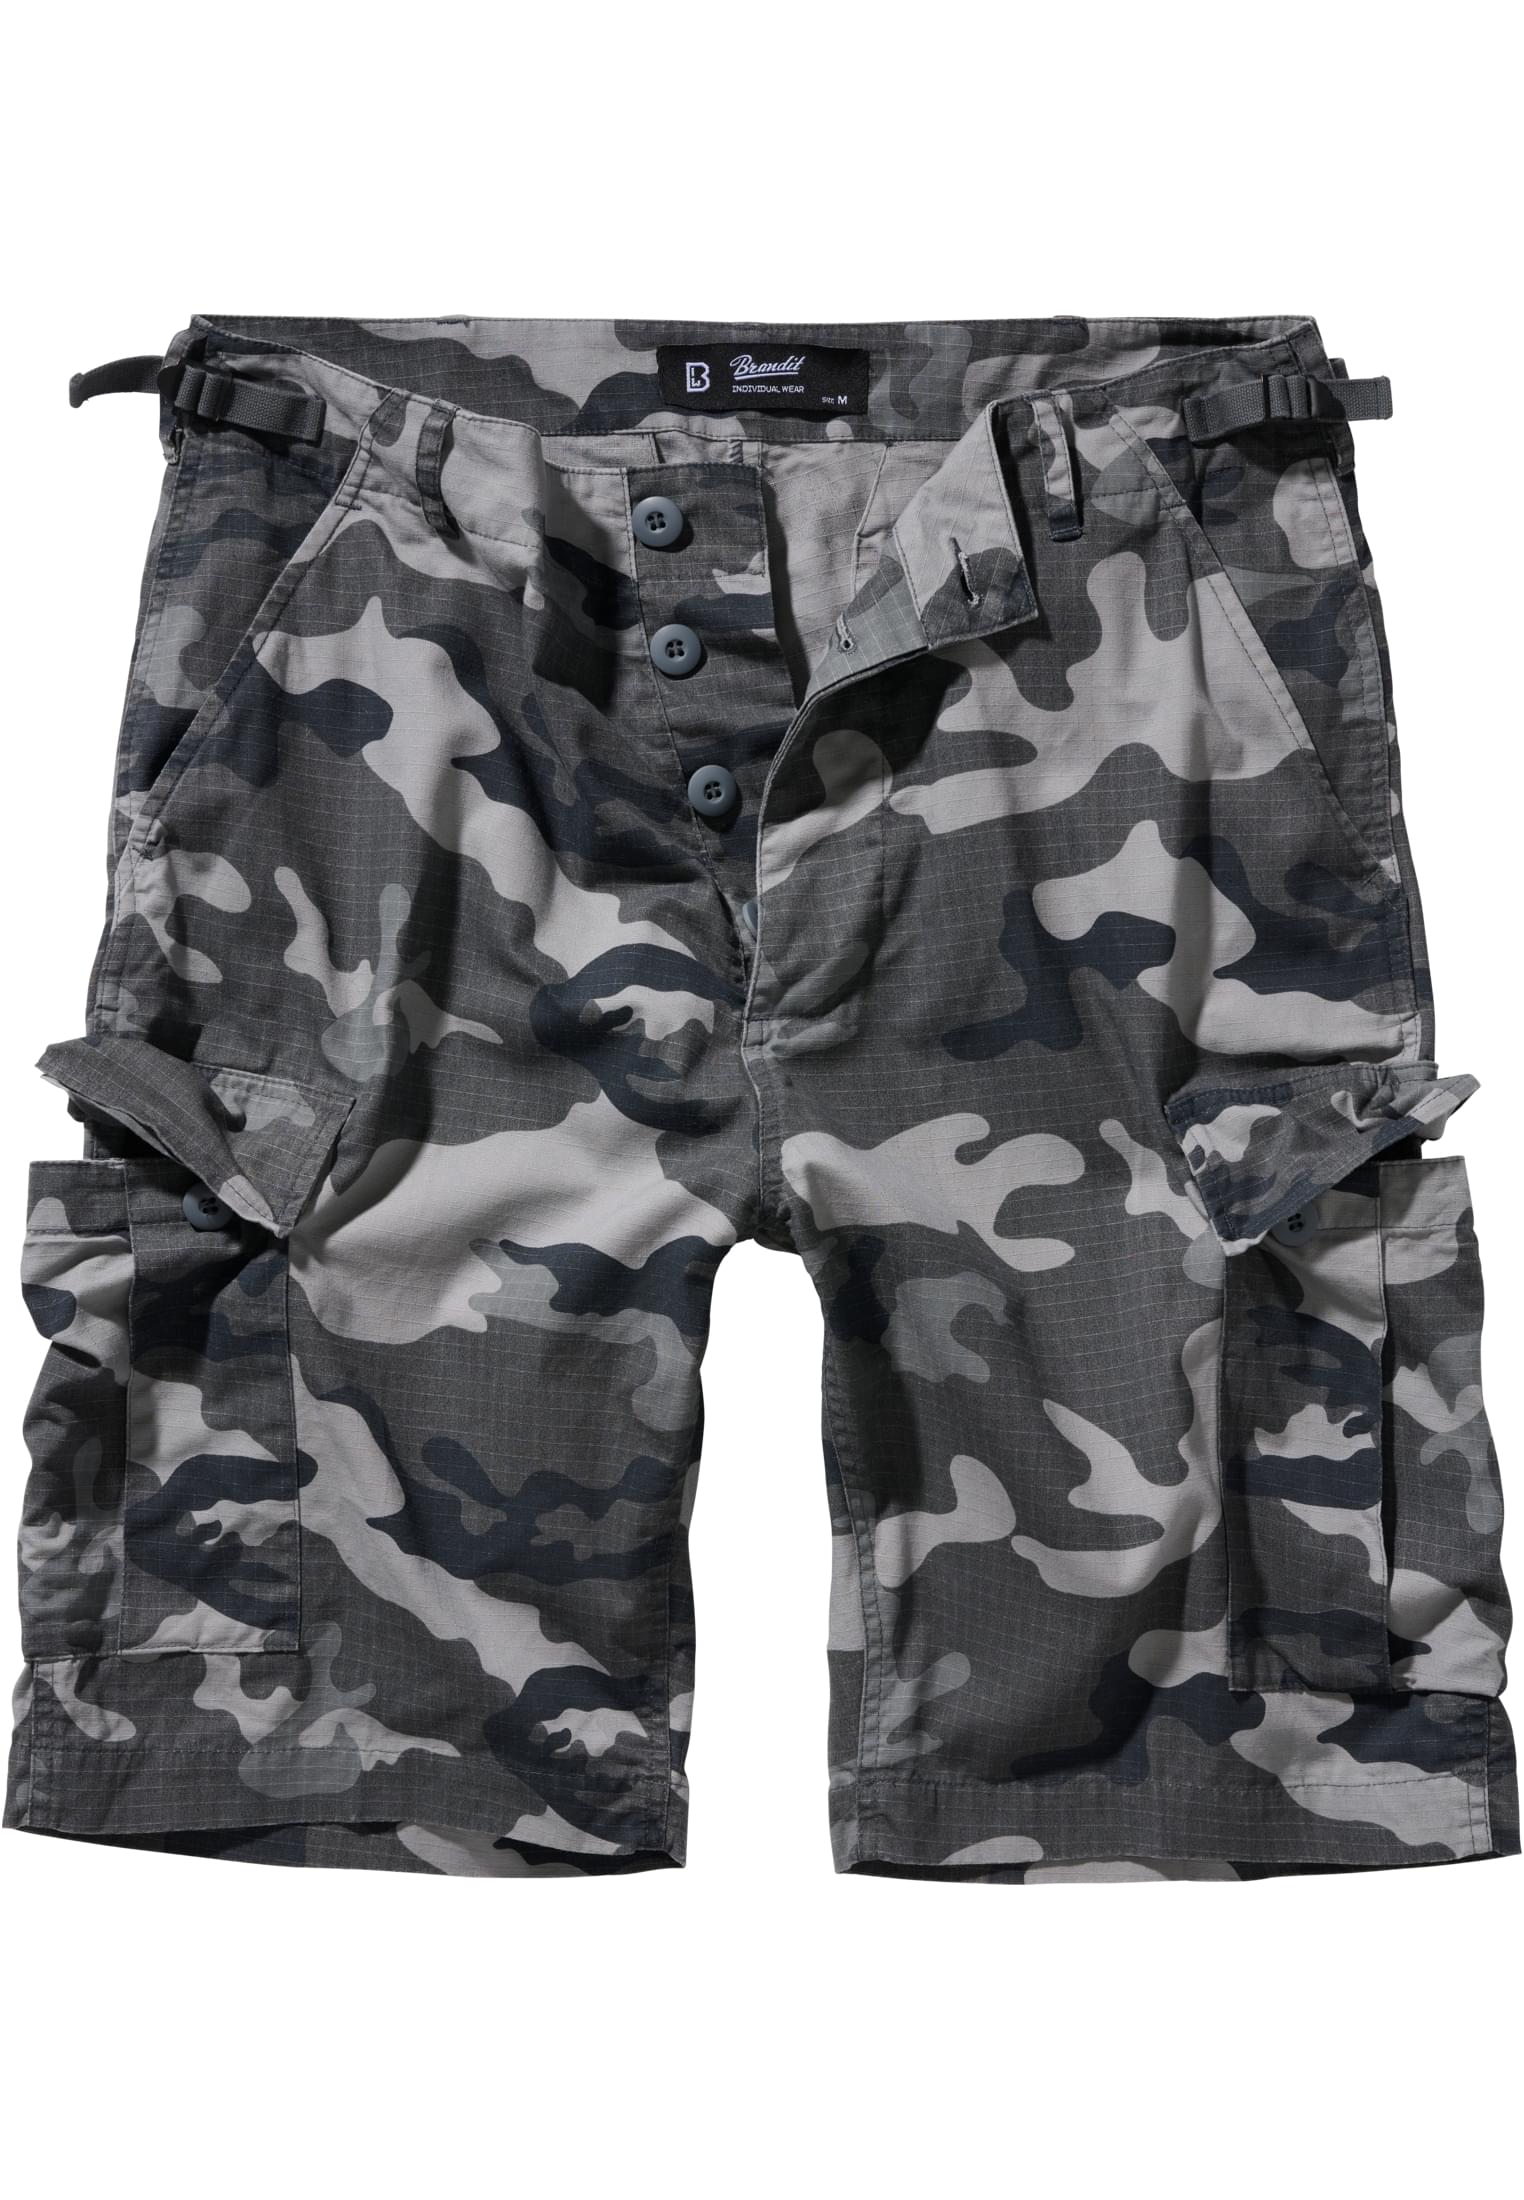 Men's BDU Ripstop Shorts - Grey/Camouflage